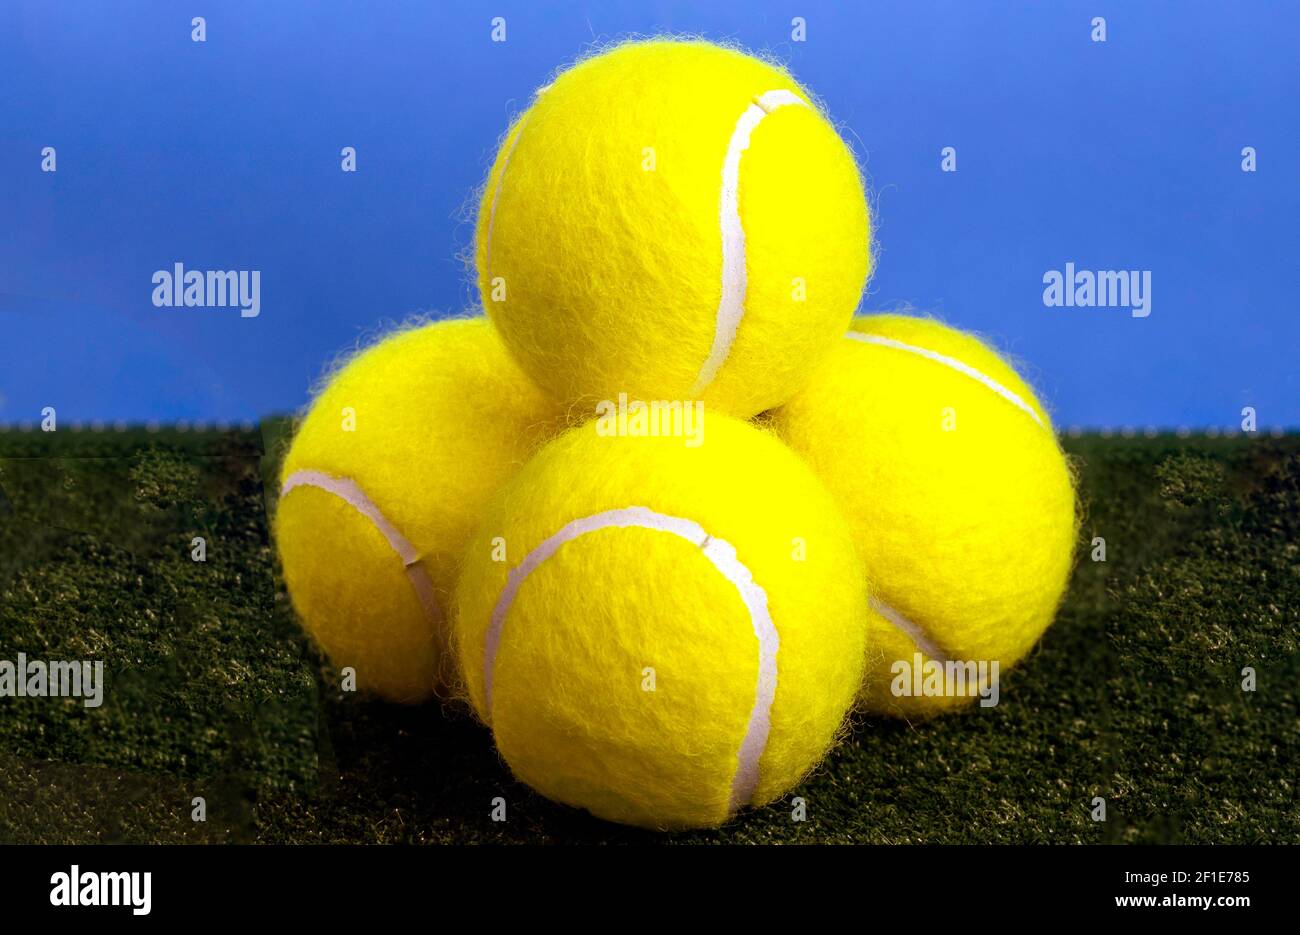 Four yellow tennis balls in studio setting, London, England, United Kingdom Stock Photo